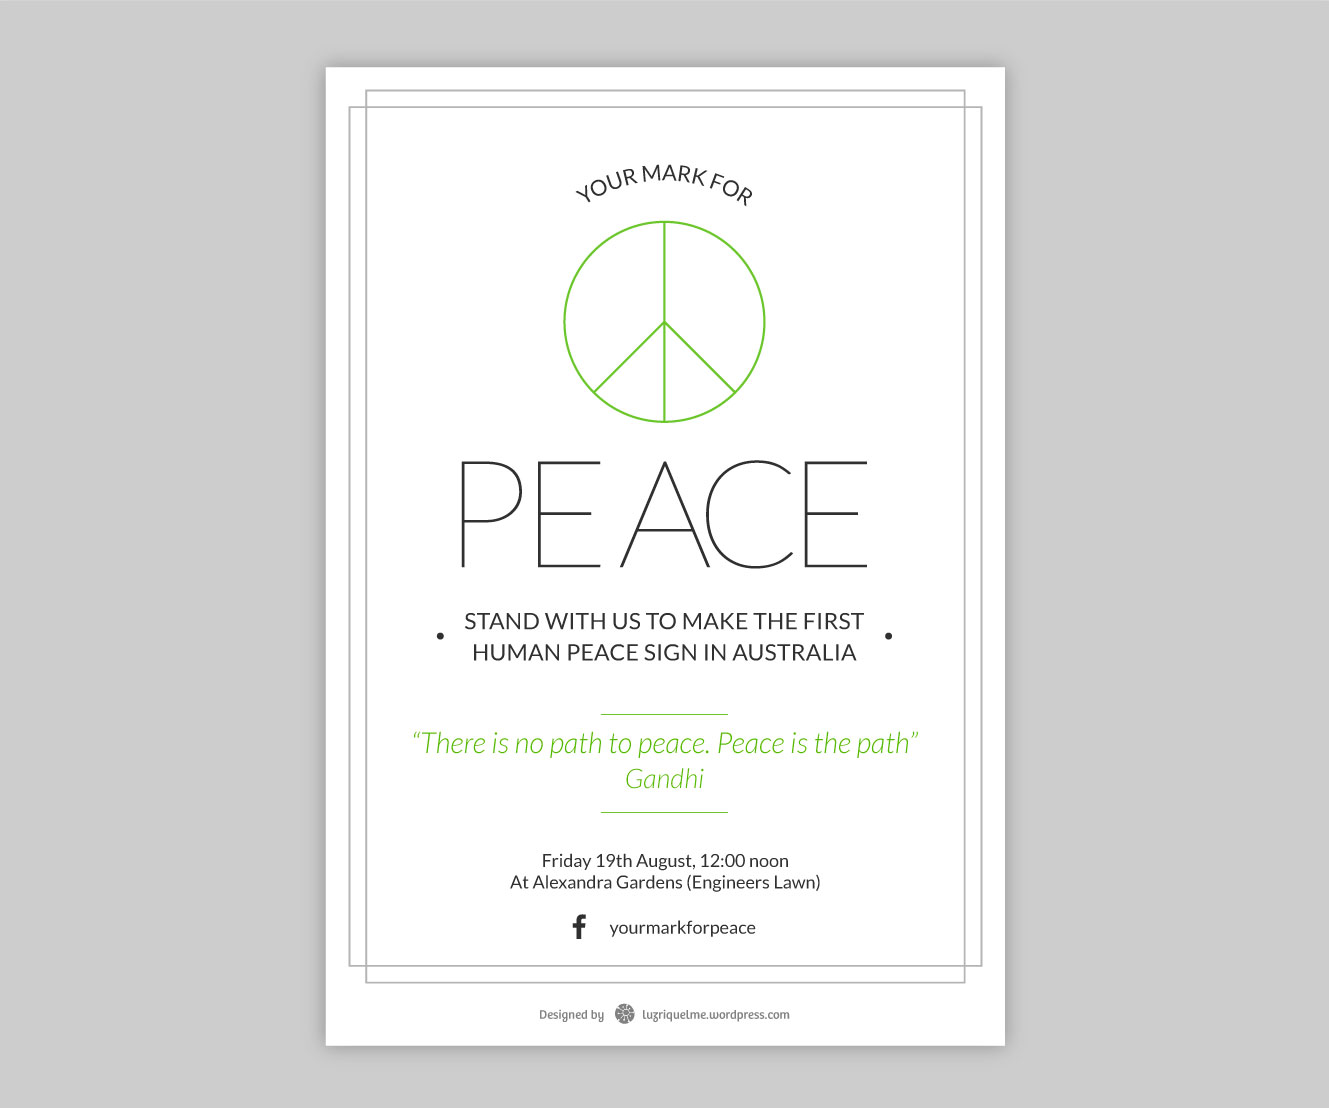 Invitation “Mark for peace”